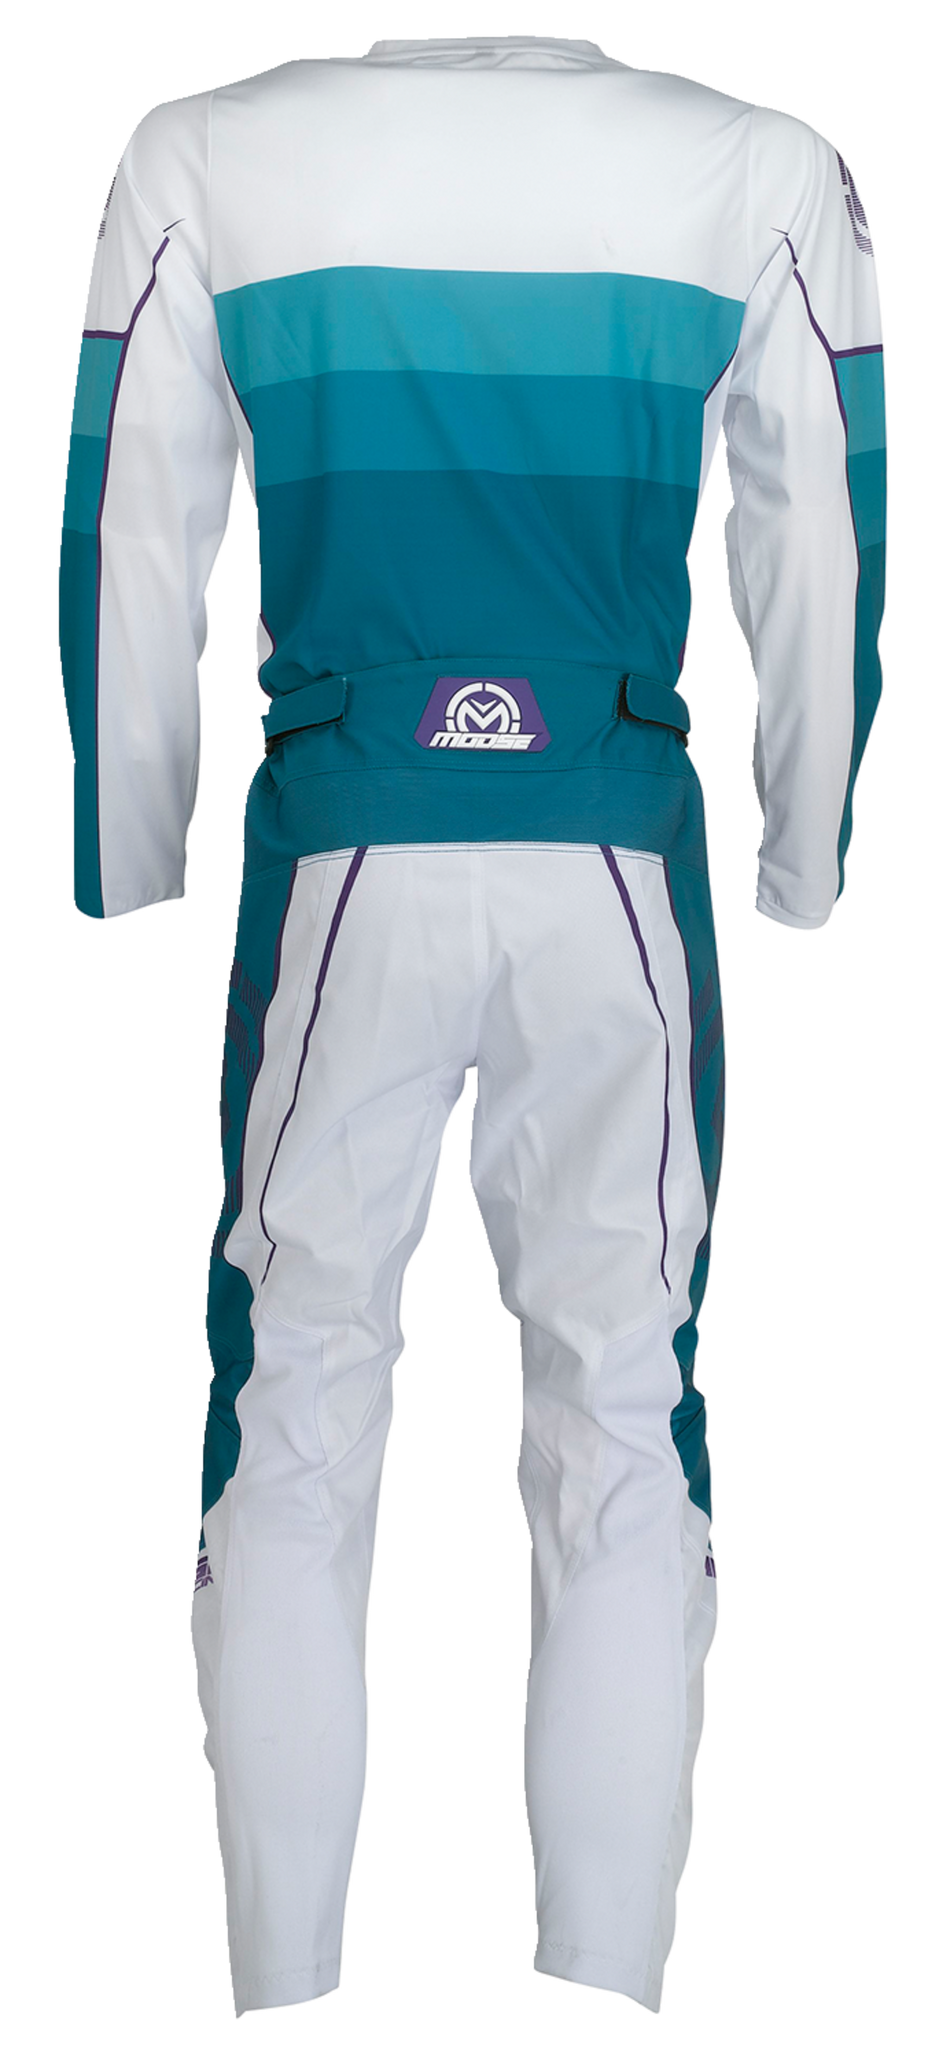 Camiseta MOOSE RACING Qualifier® - Azul/Blanco - Pequeña 2910-7172 